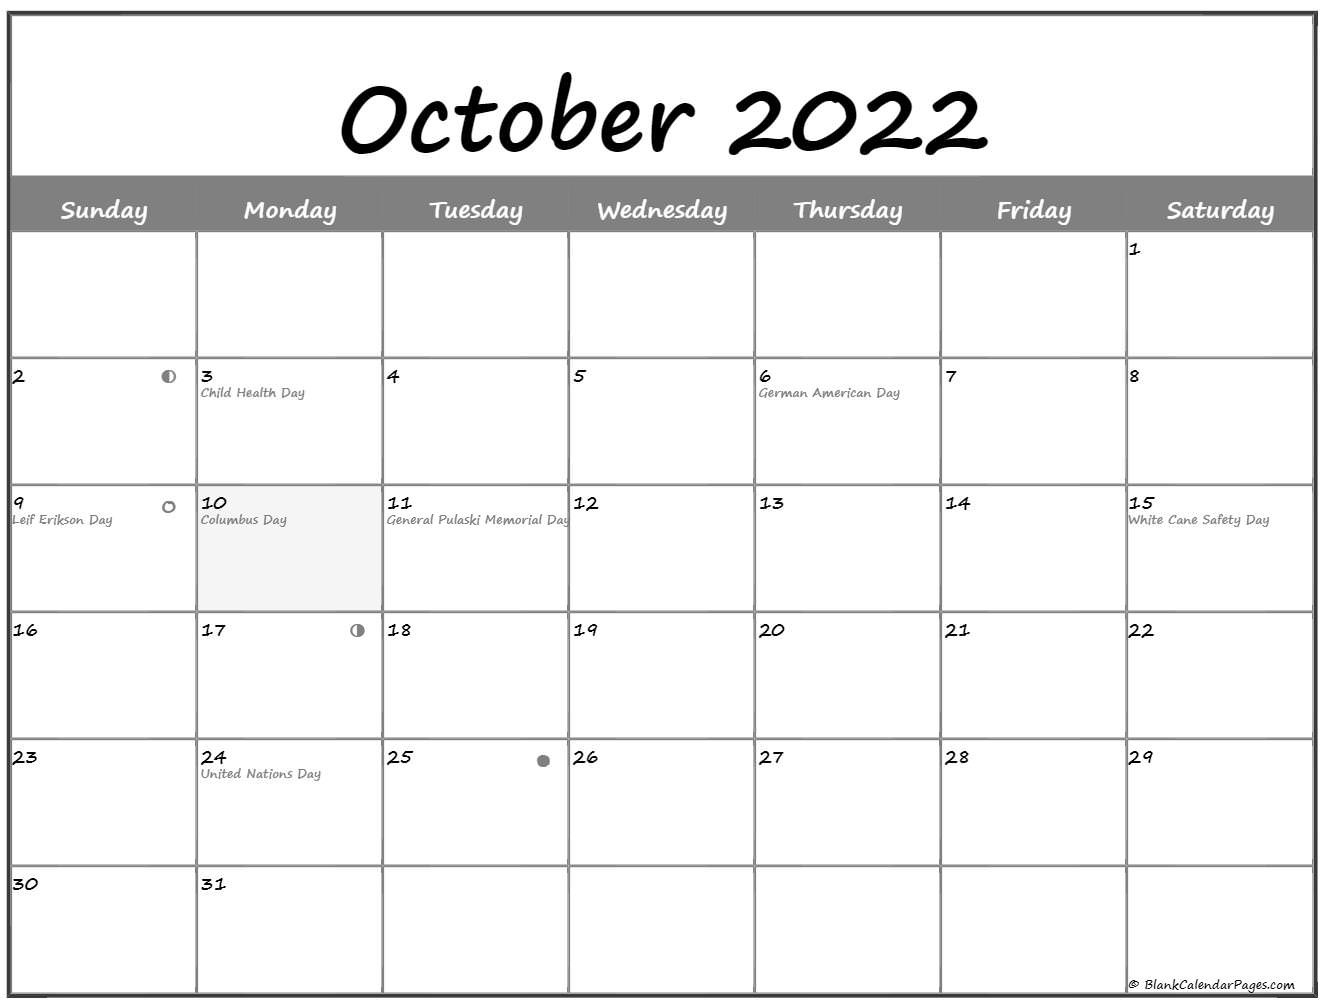 October 2022 Lunar Calendar | Moon Phase Calendar  Calendar October 2022 To February 2022